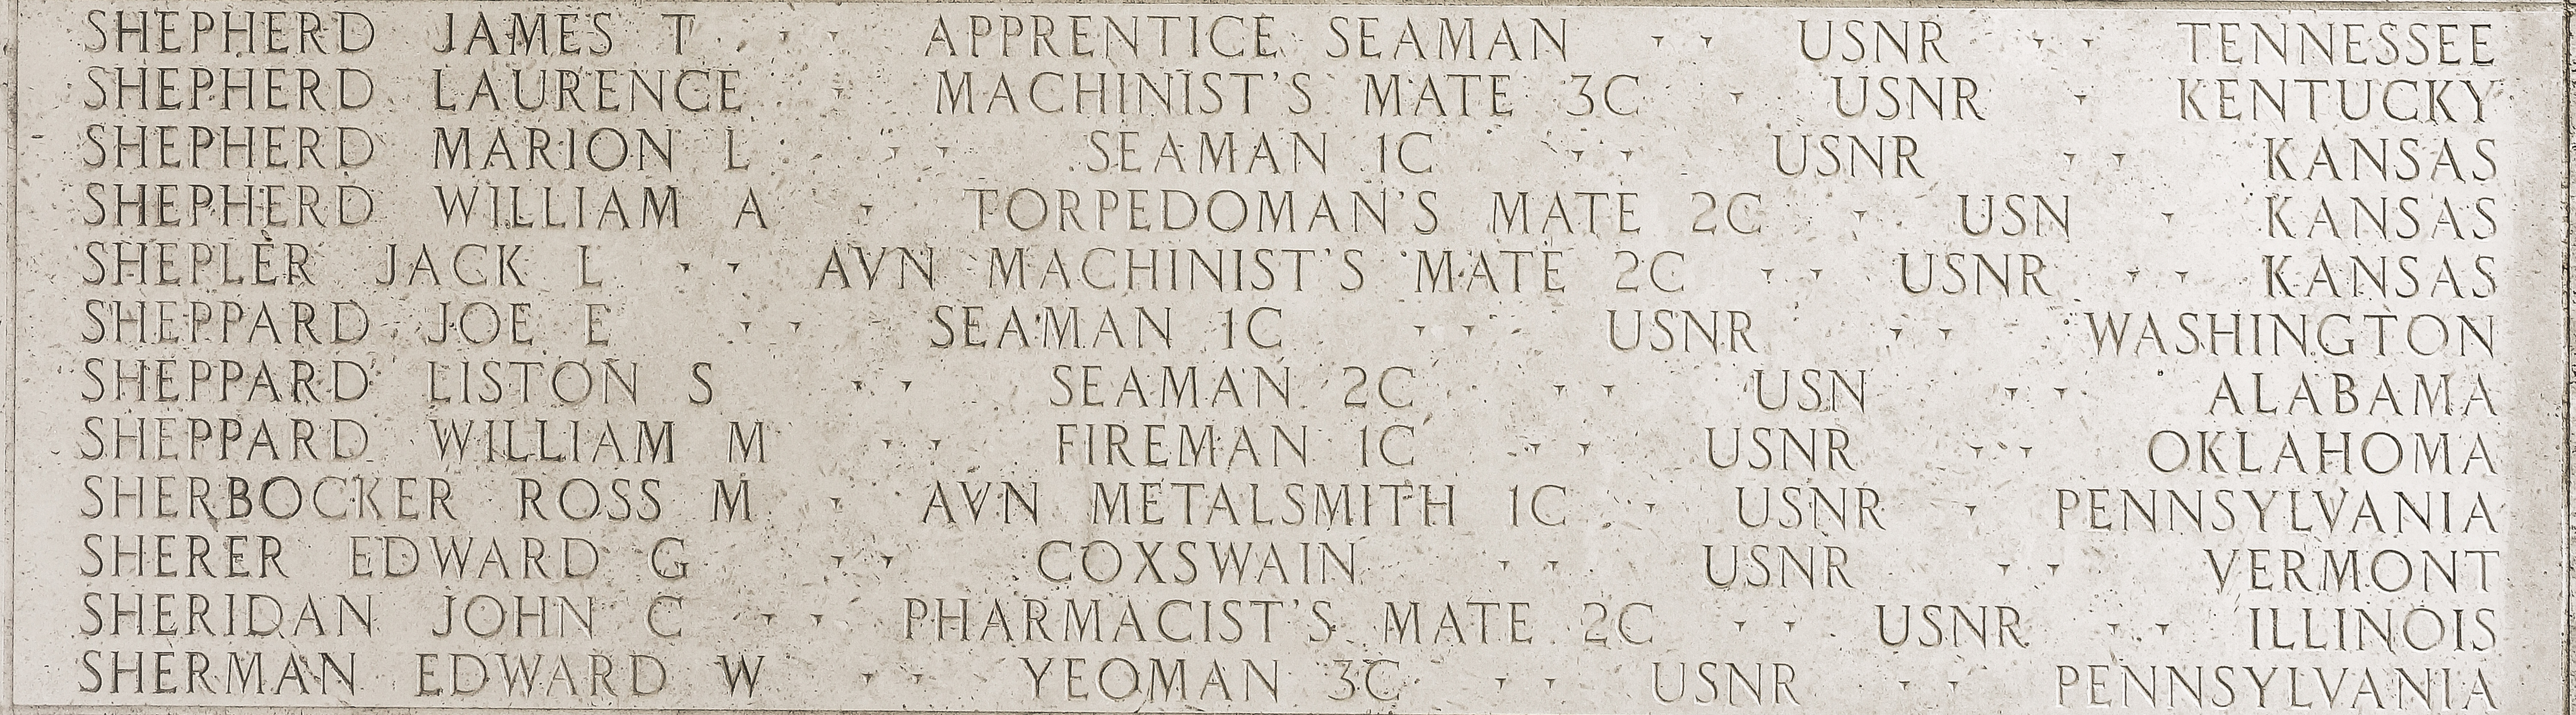 James T. Shepherd, Apprentice Seaman